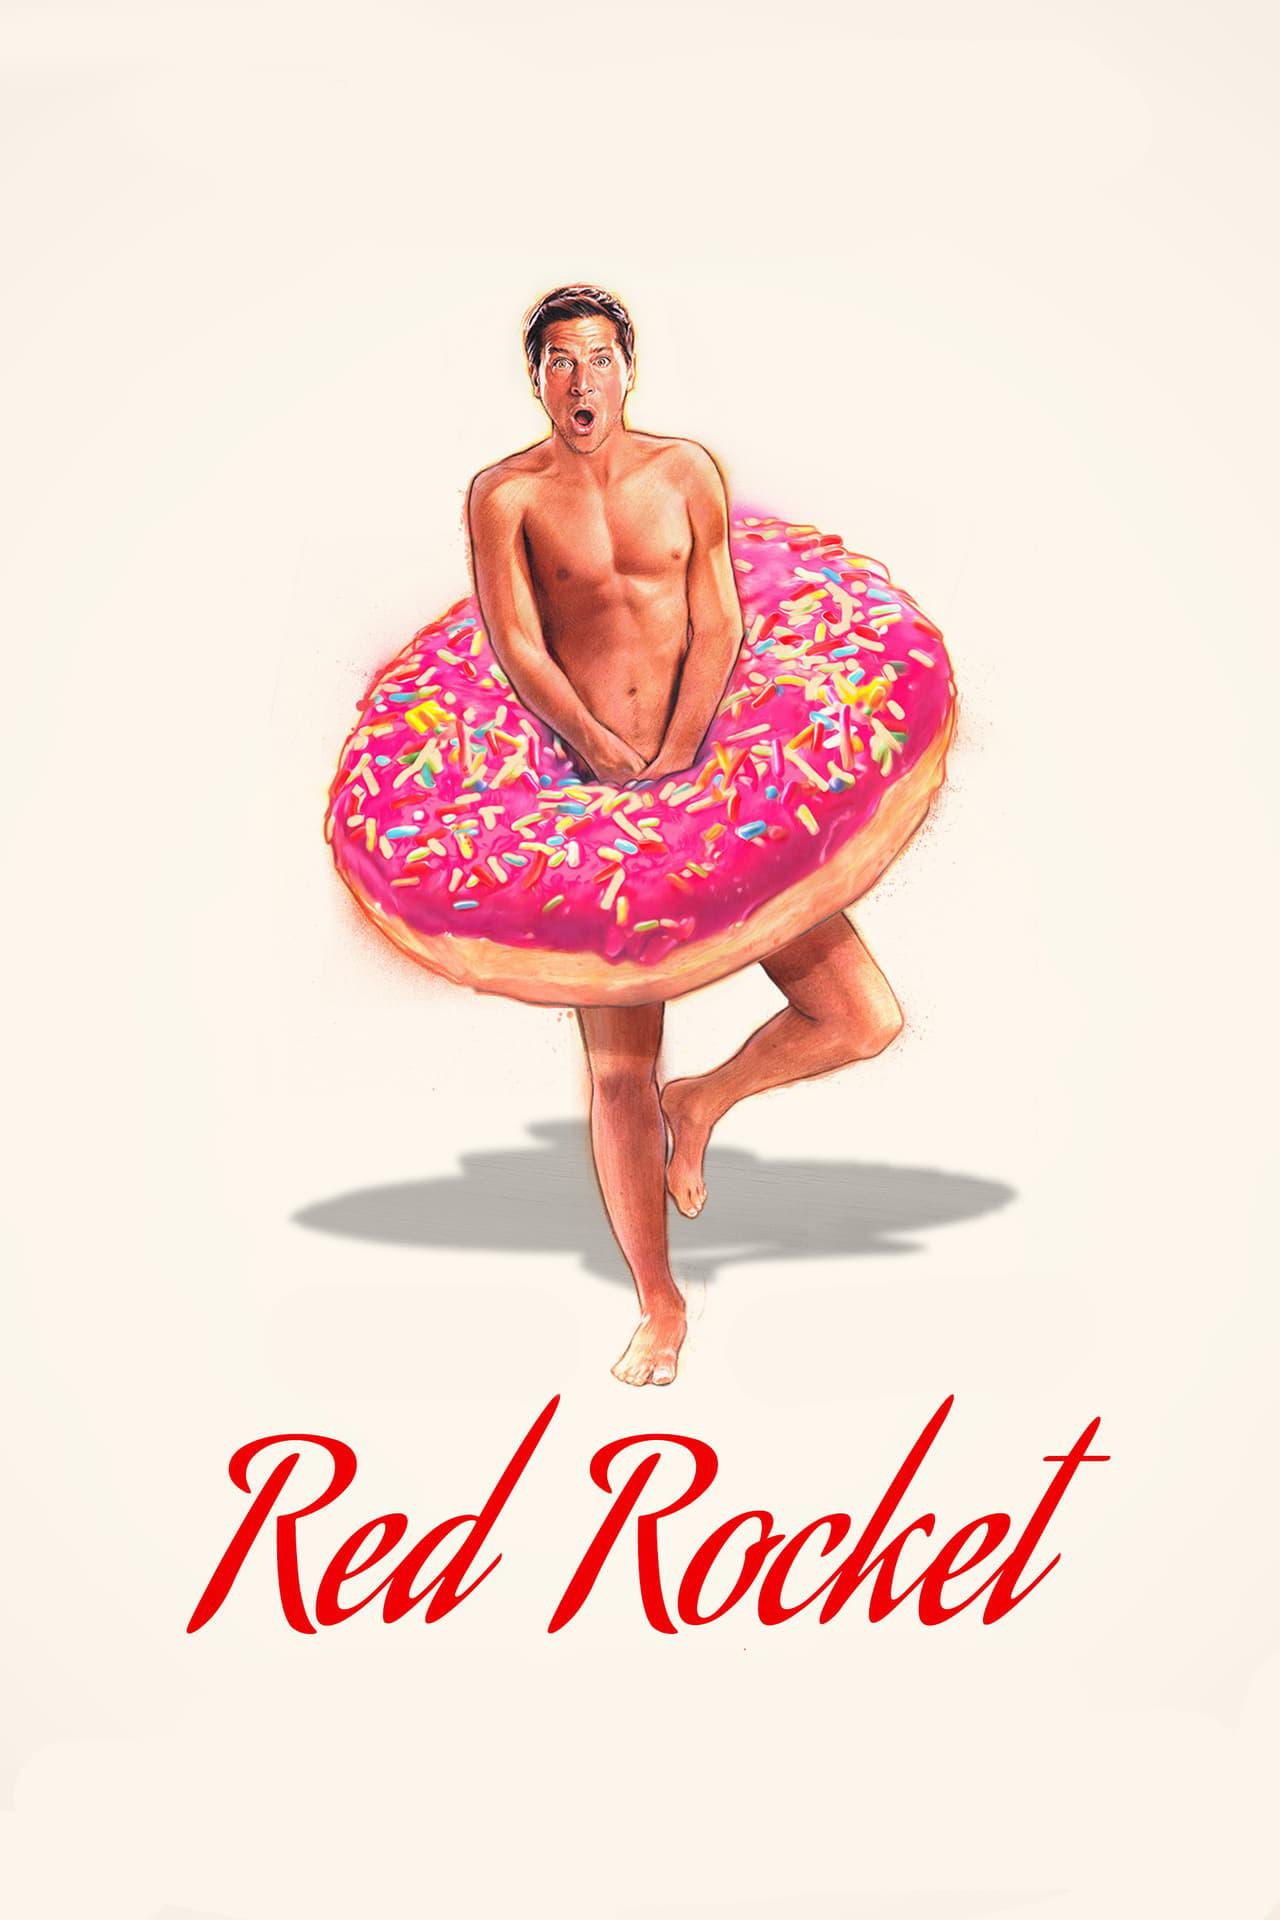 Red Rocket | awwrated | 你的 Netflix 避雷好幫手!